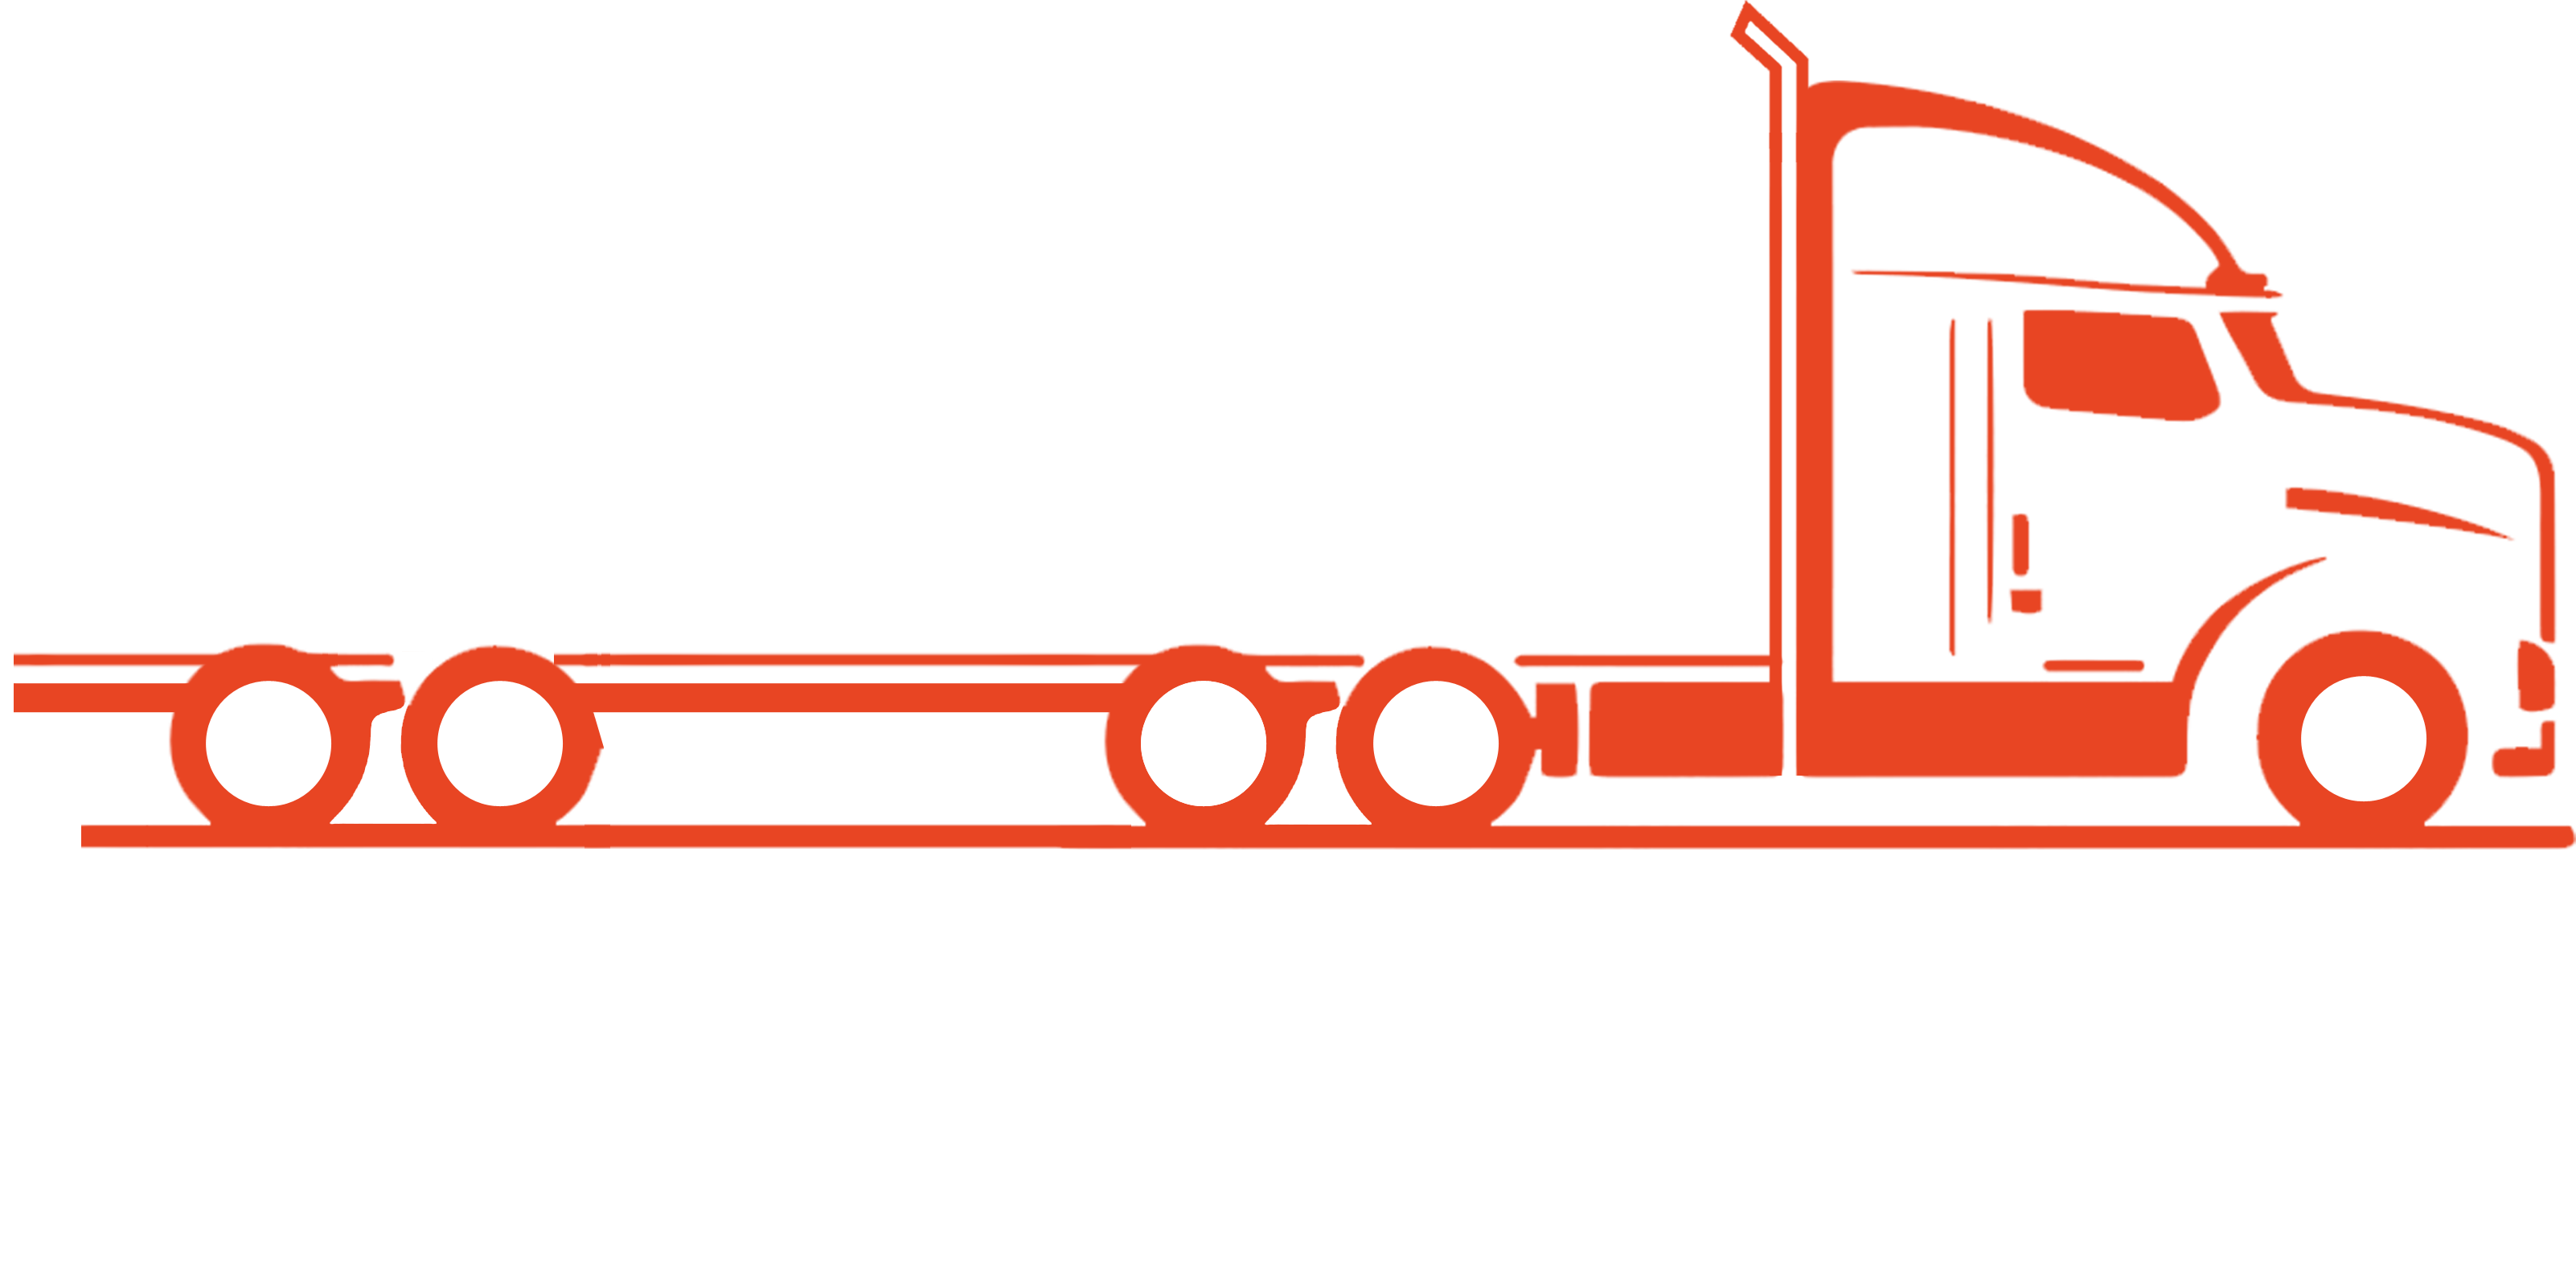 The Freight Logistics